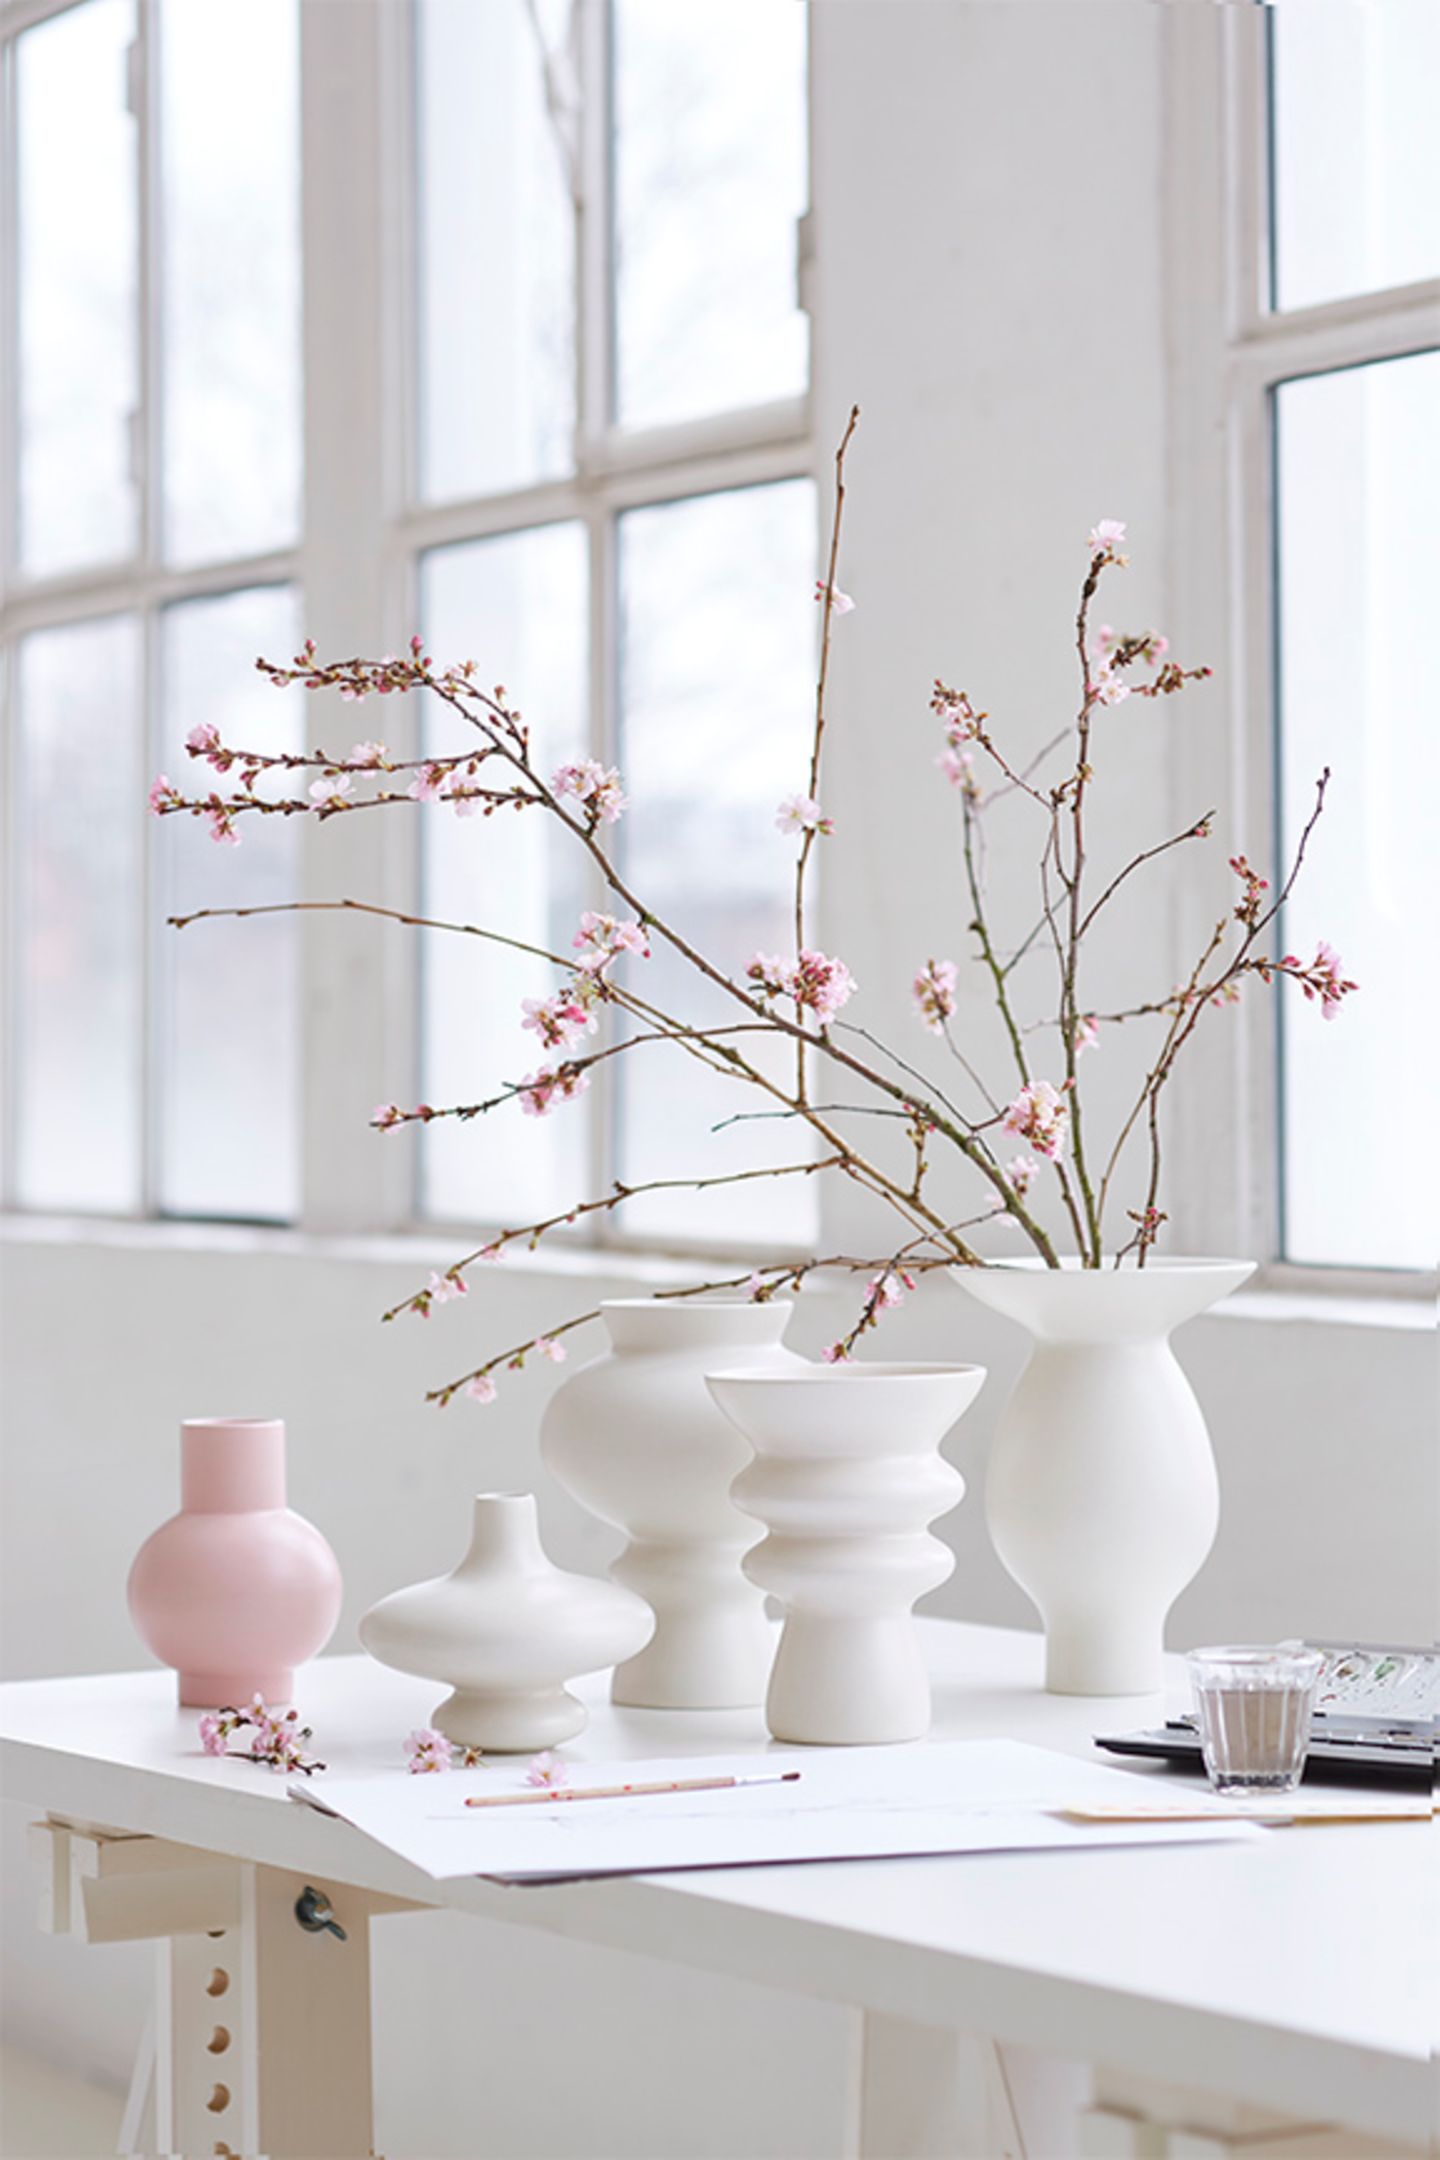 Rosa Kermikvase neben vier weißen Vasen